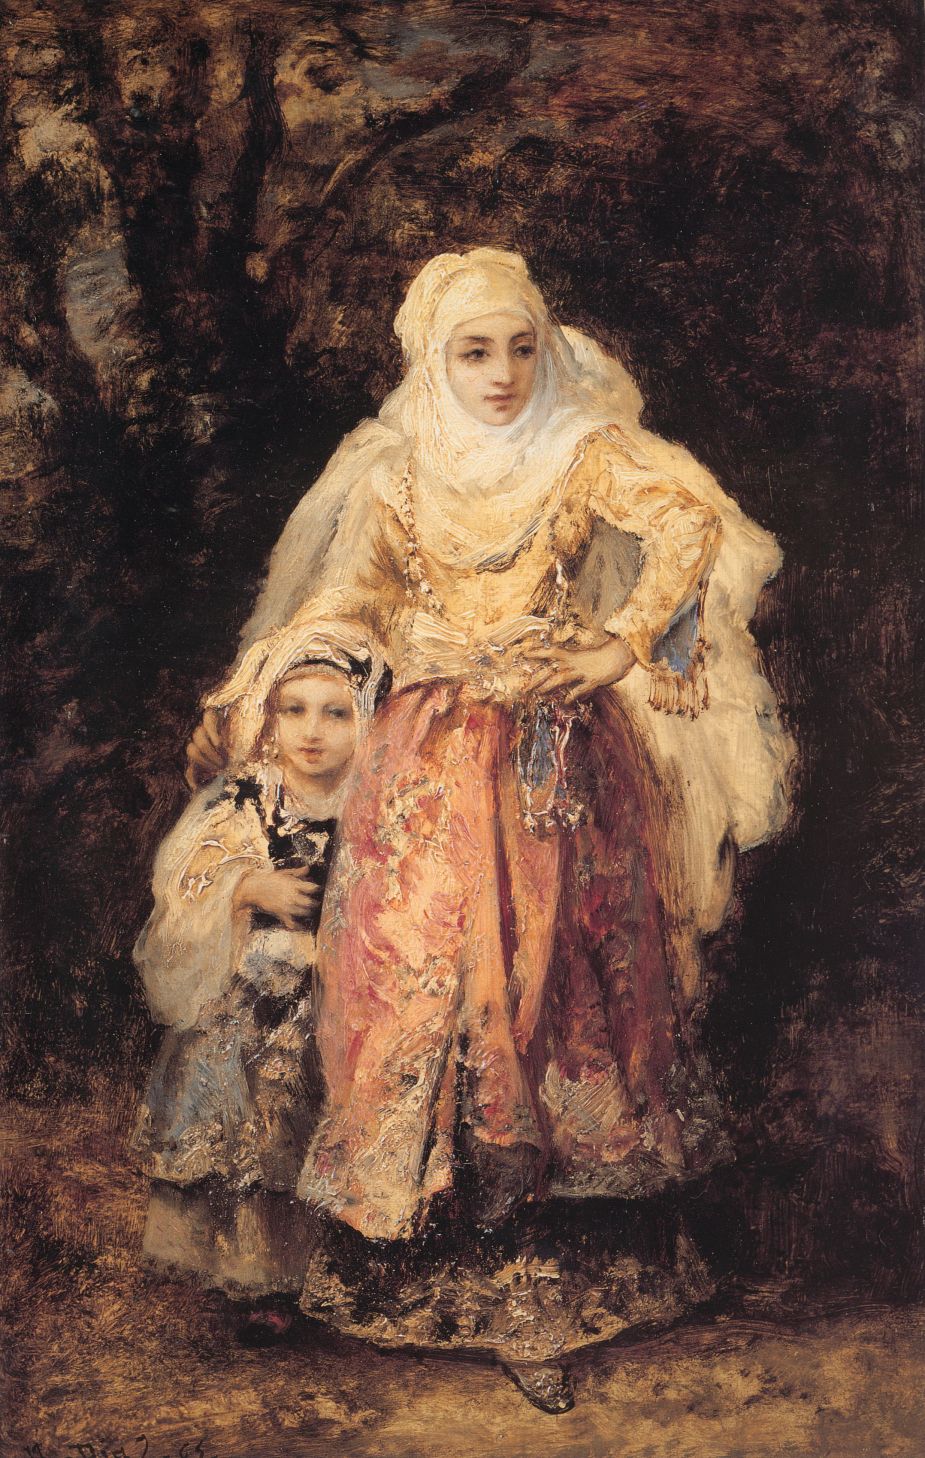 Oriental Woman and Her Daughter by Narcisse Virgile Diaz de la Pena